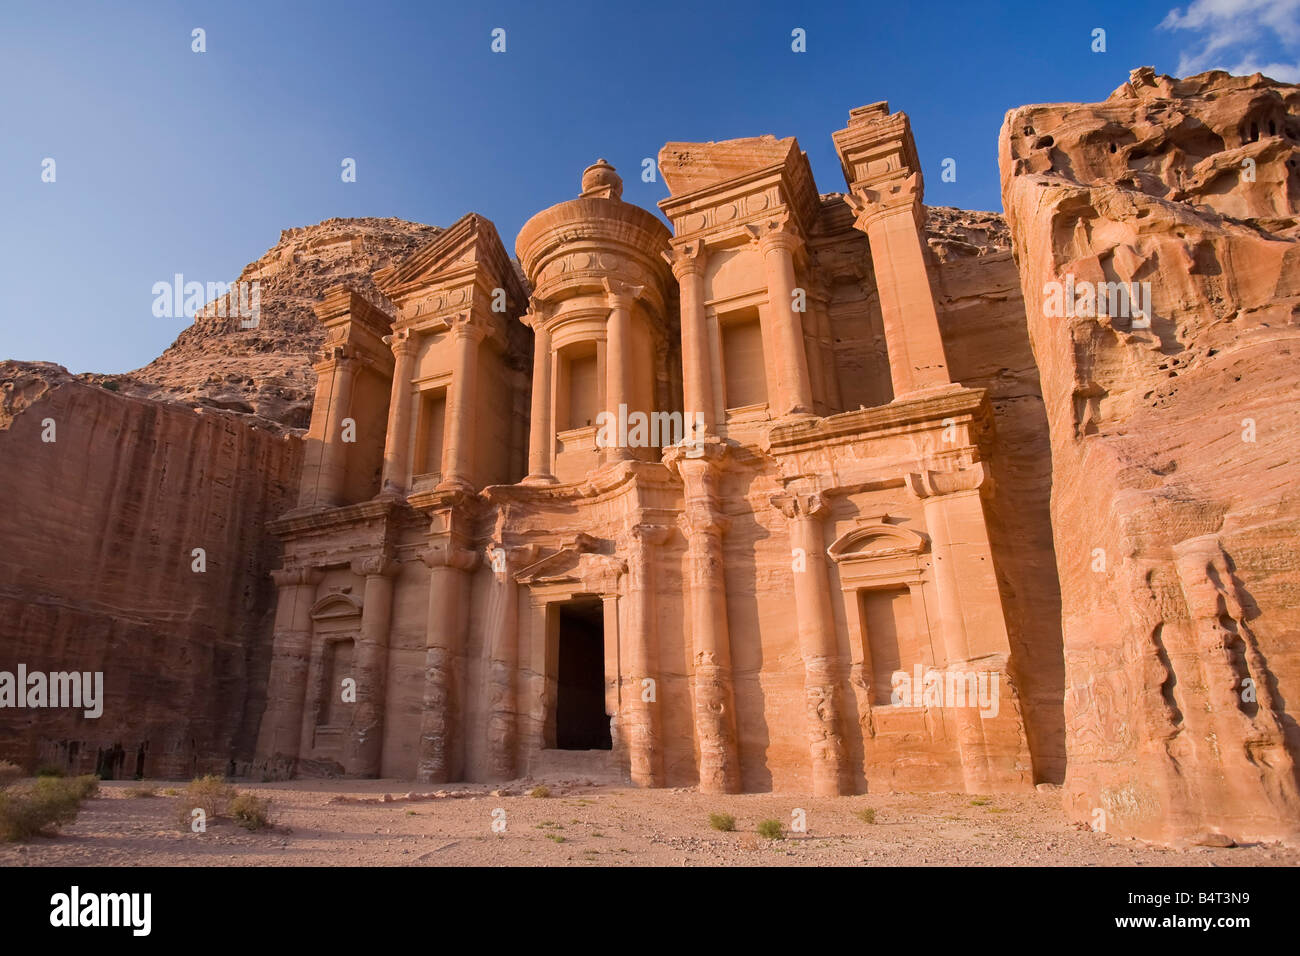 The Monastery (Al-Deir), Petra (UNESCO world heritage site), Jordan Photo -